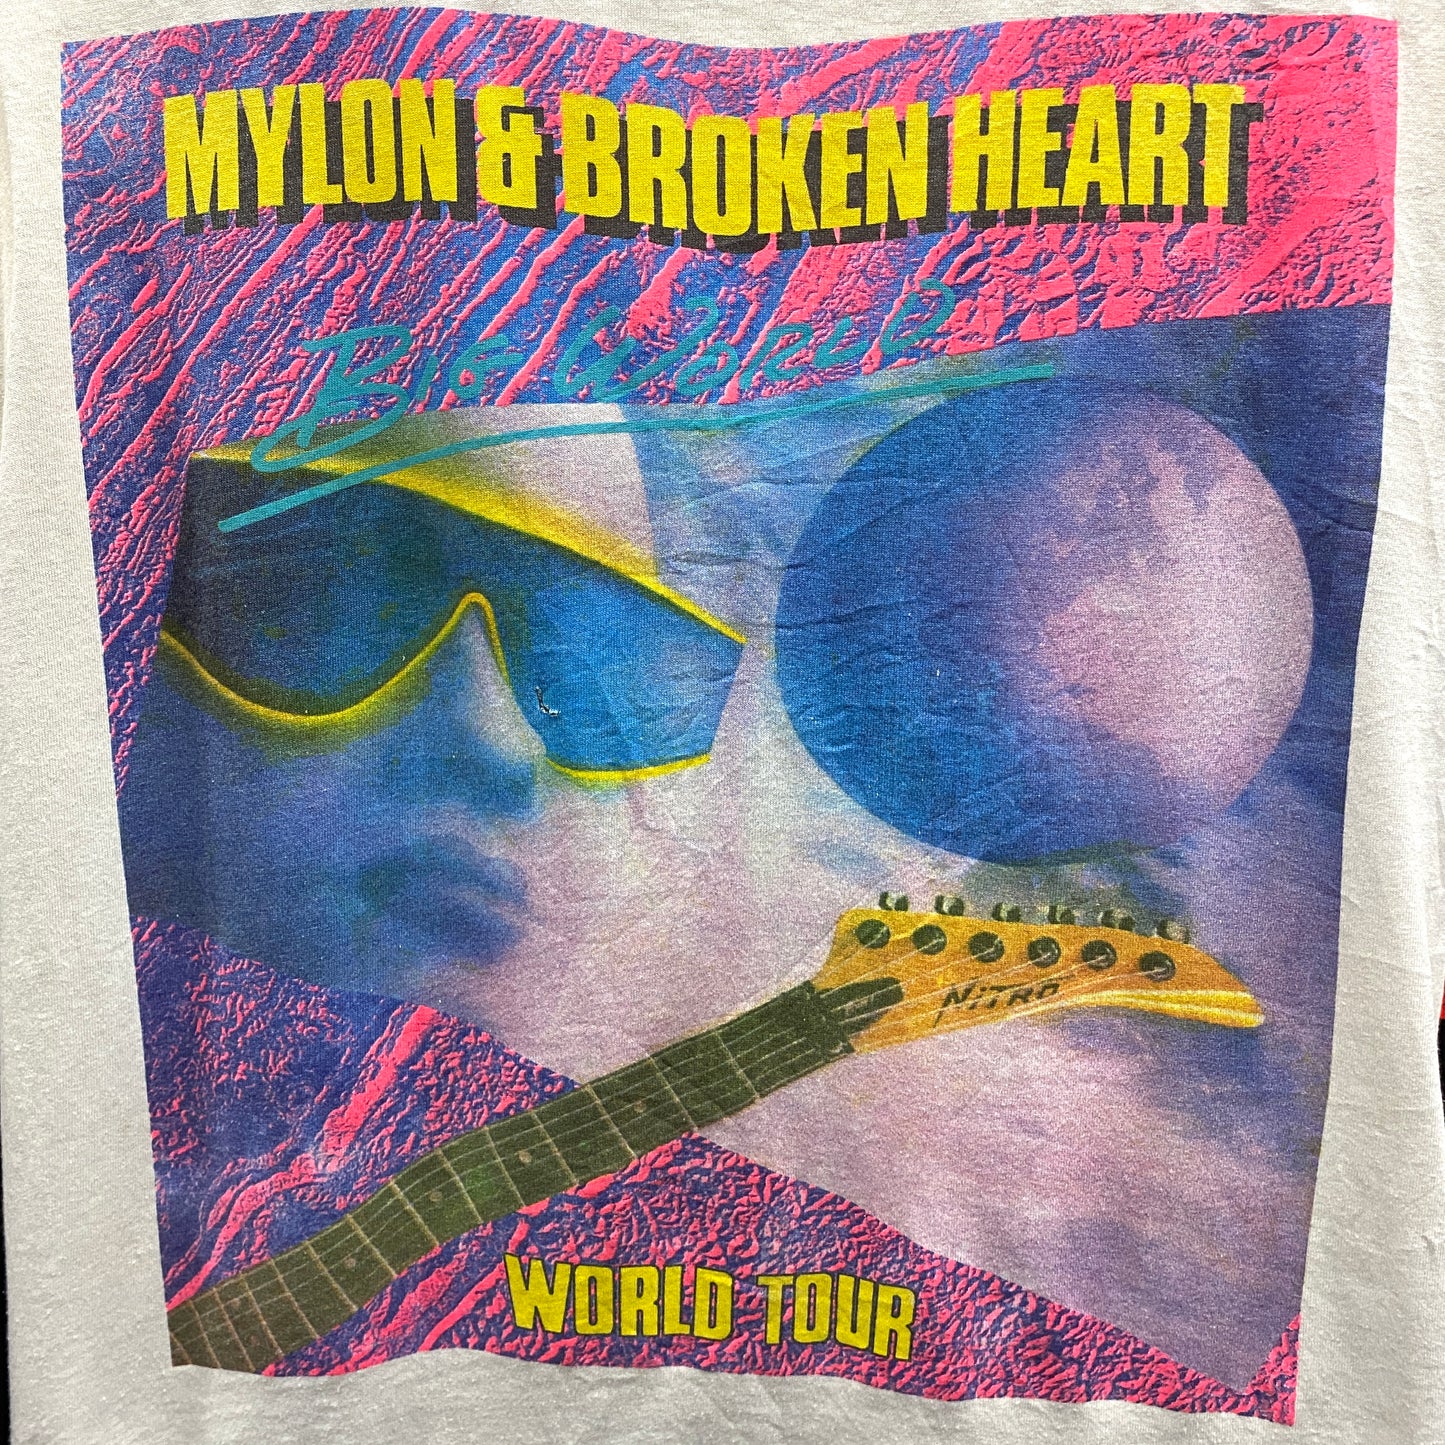 80's Mylon & Broken Heart Tour White Music T-shirt sz L